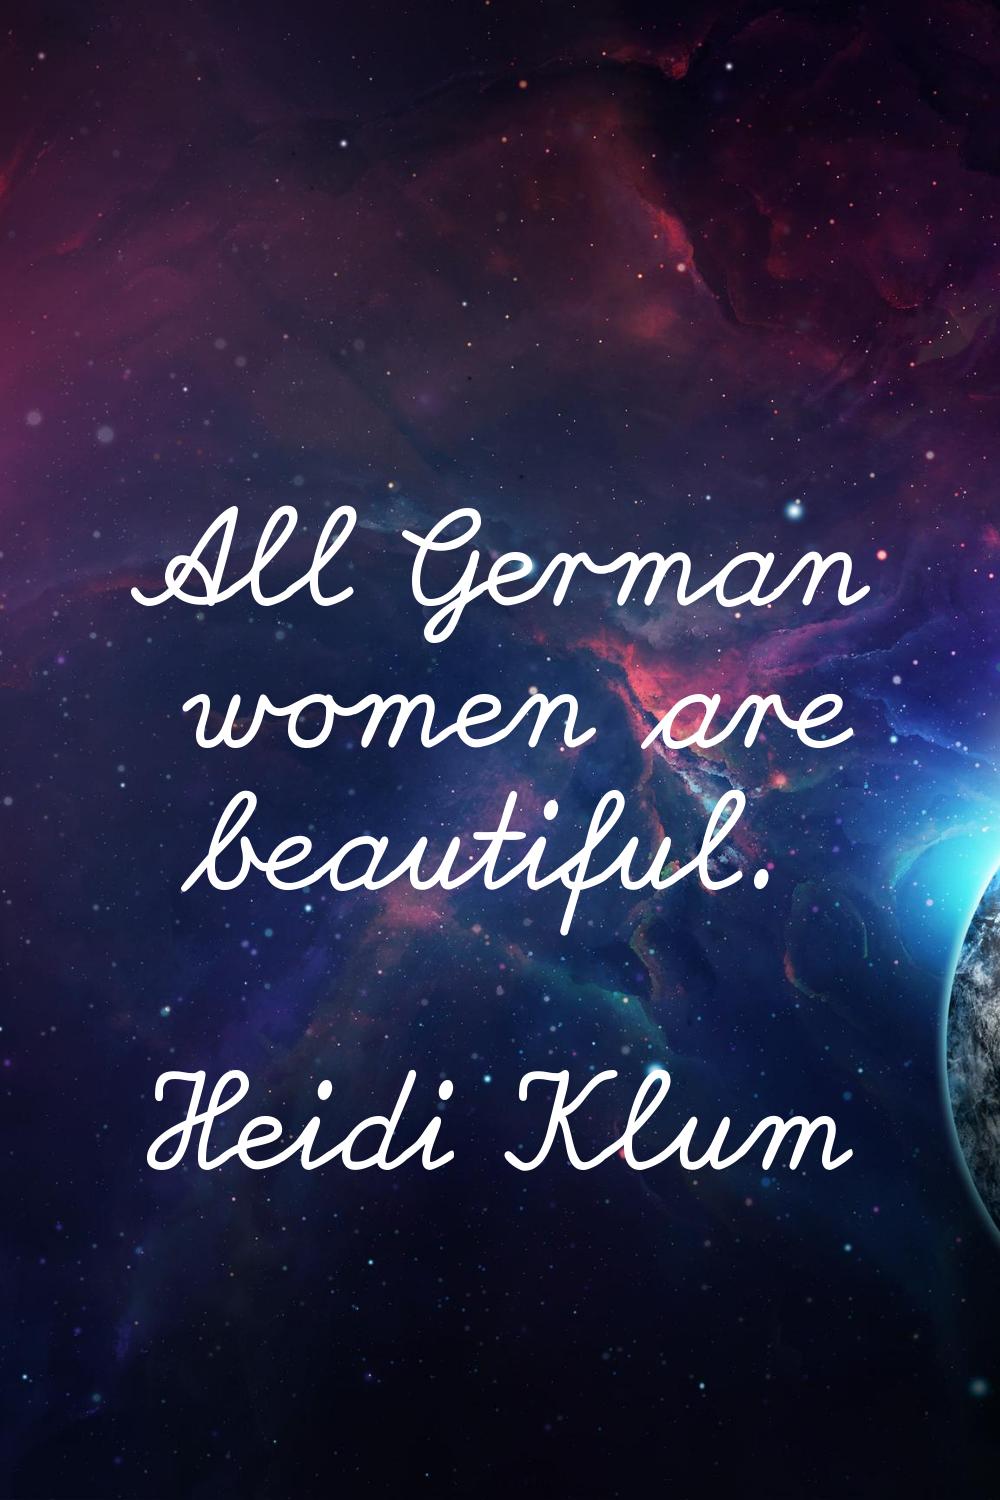 All German women are beautiful.